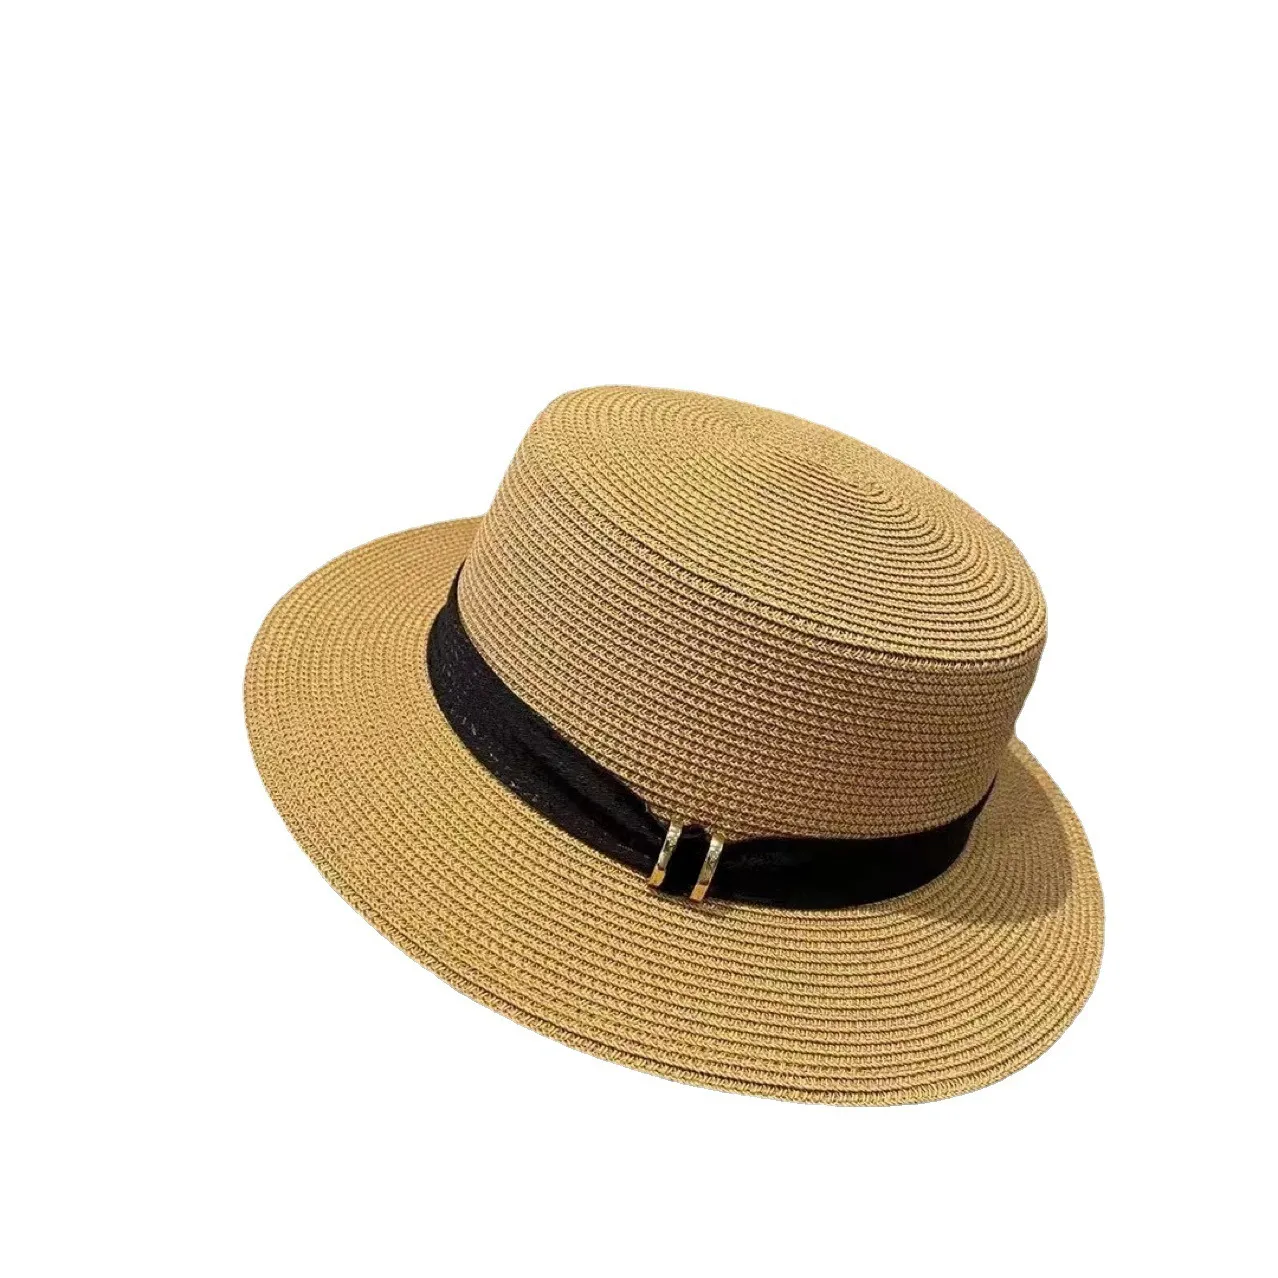 Moda Frenda à prova de sol japonês chapéus de palha lisam de palha feminino chapéu de palha de verão feminino feminino chapéu de sol à prova de sol